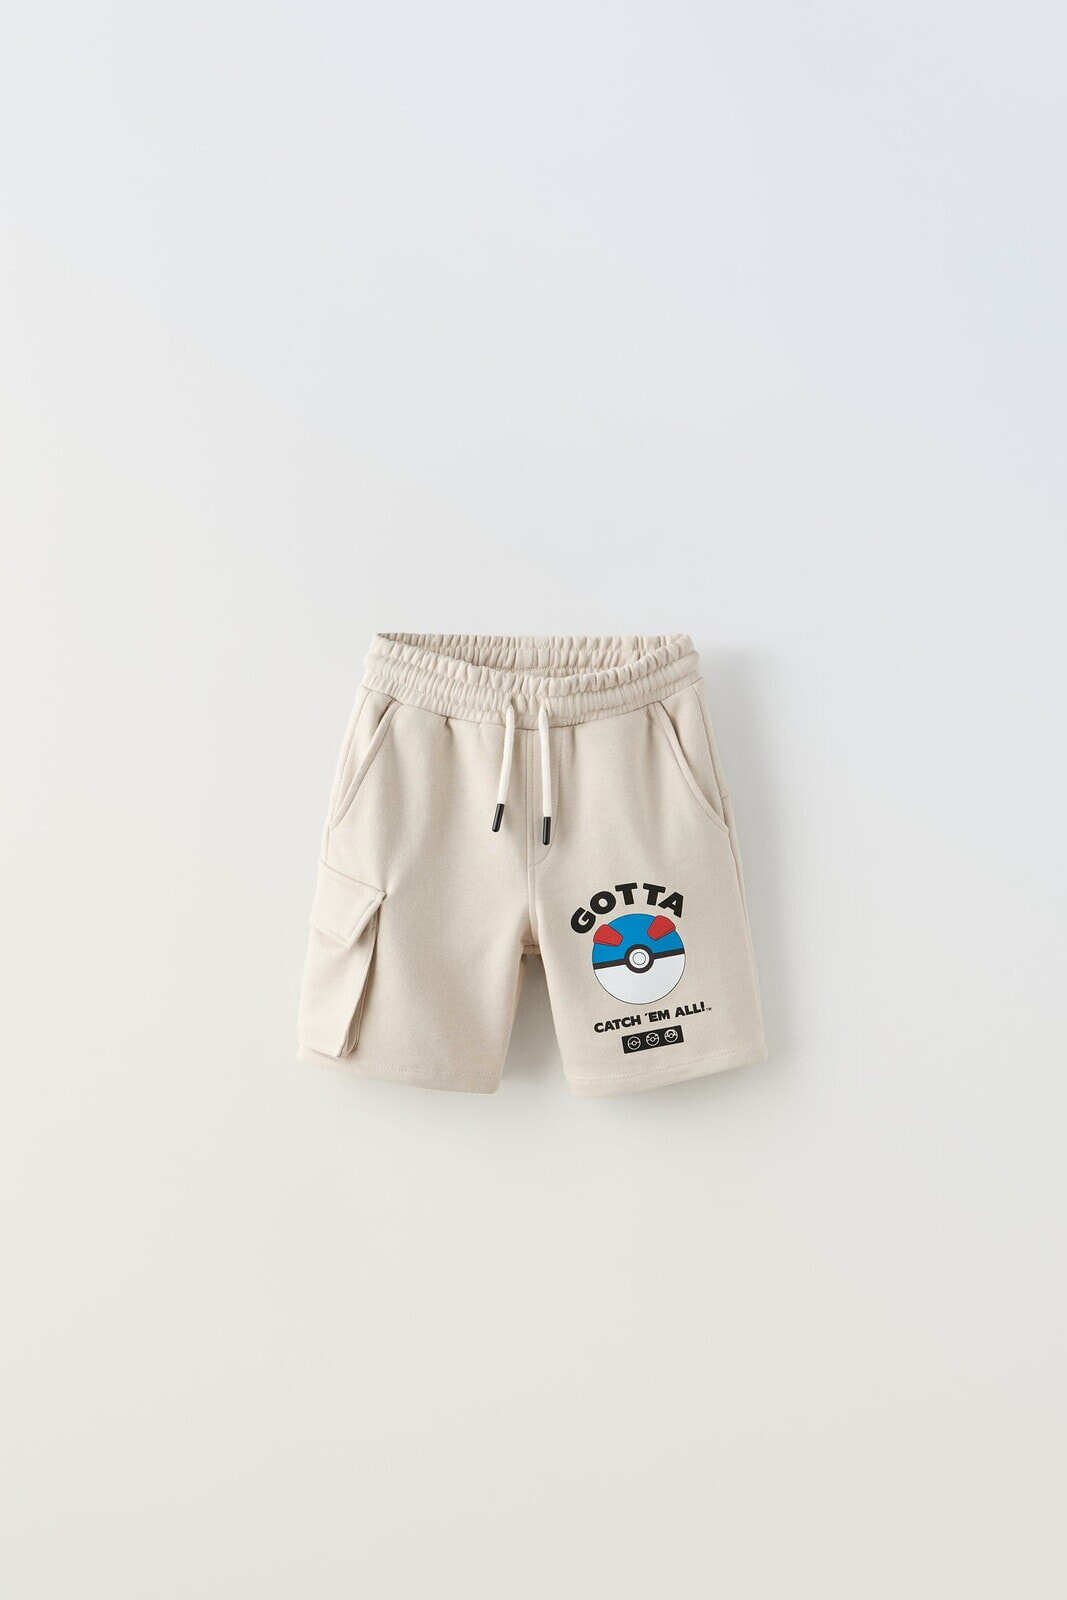 Plush poké ball pokémon ™ bermuda shorts